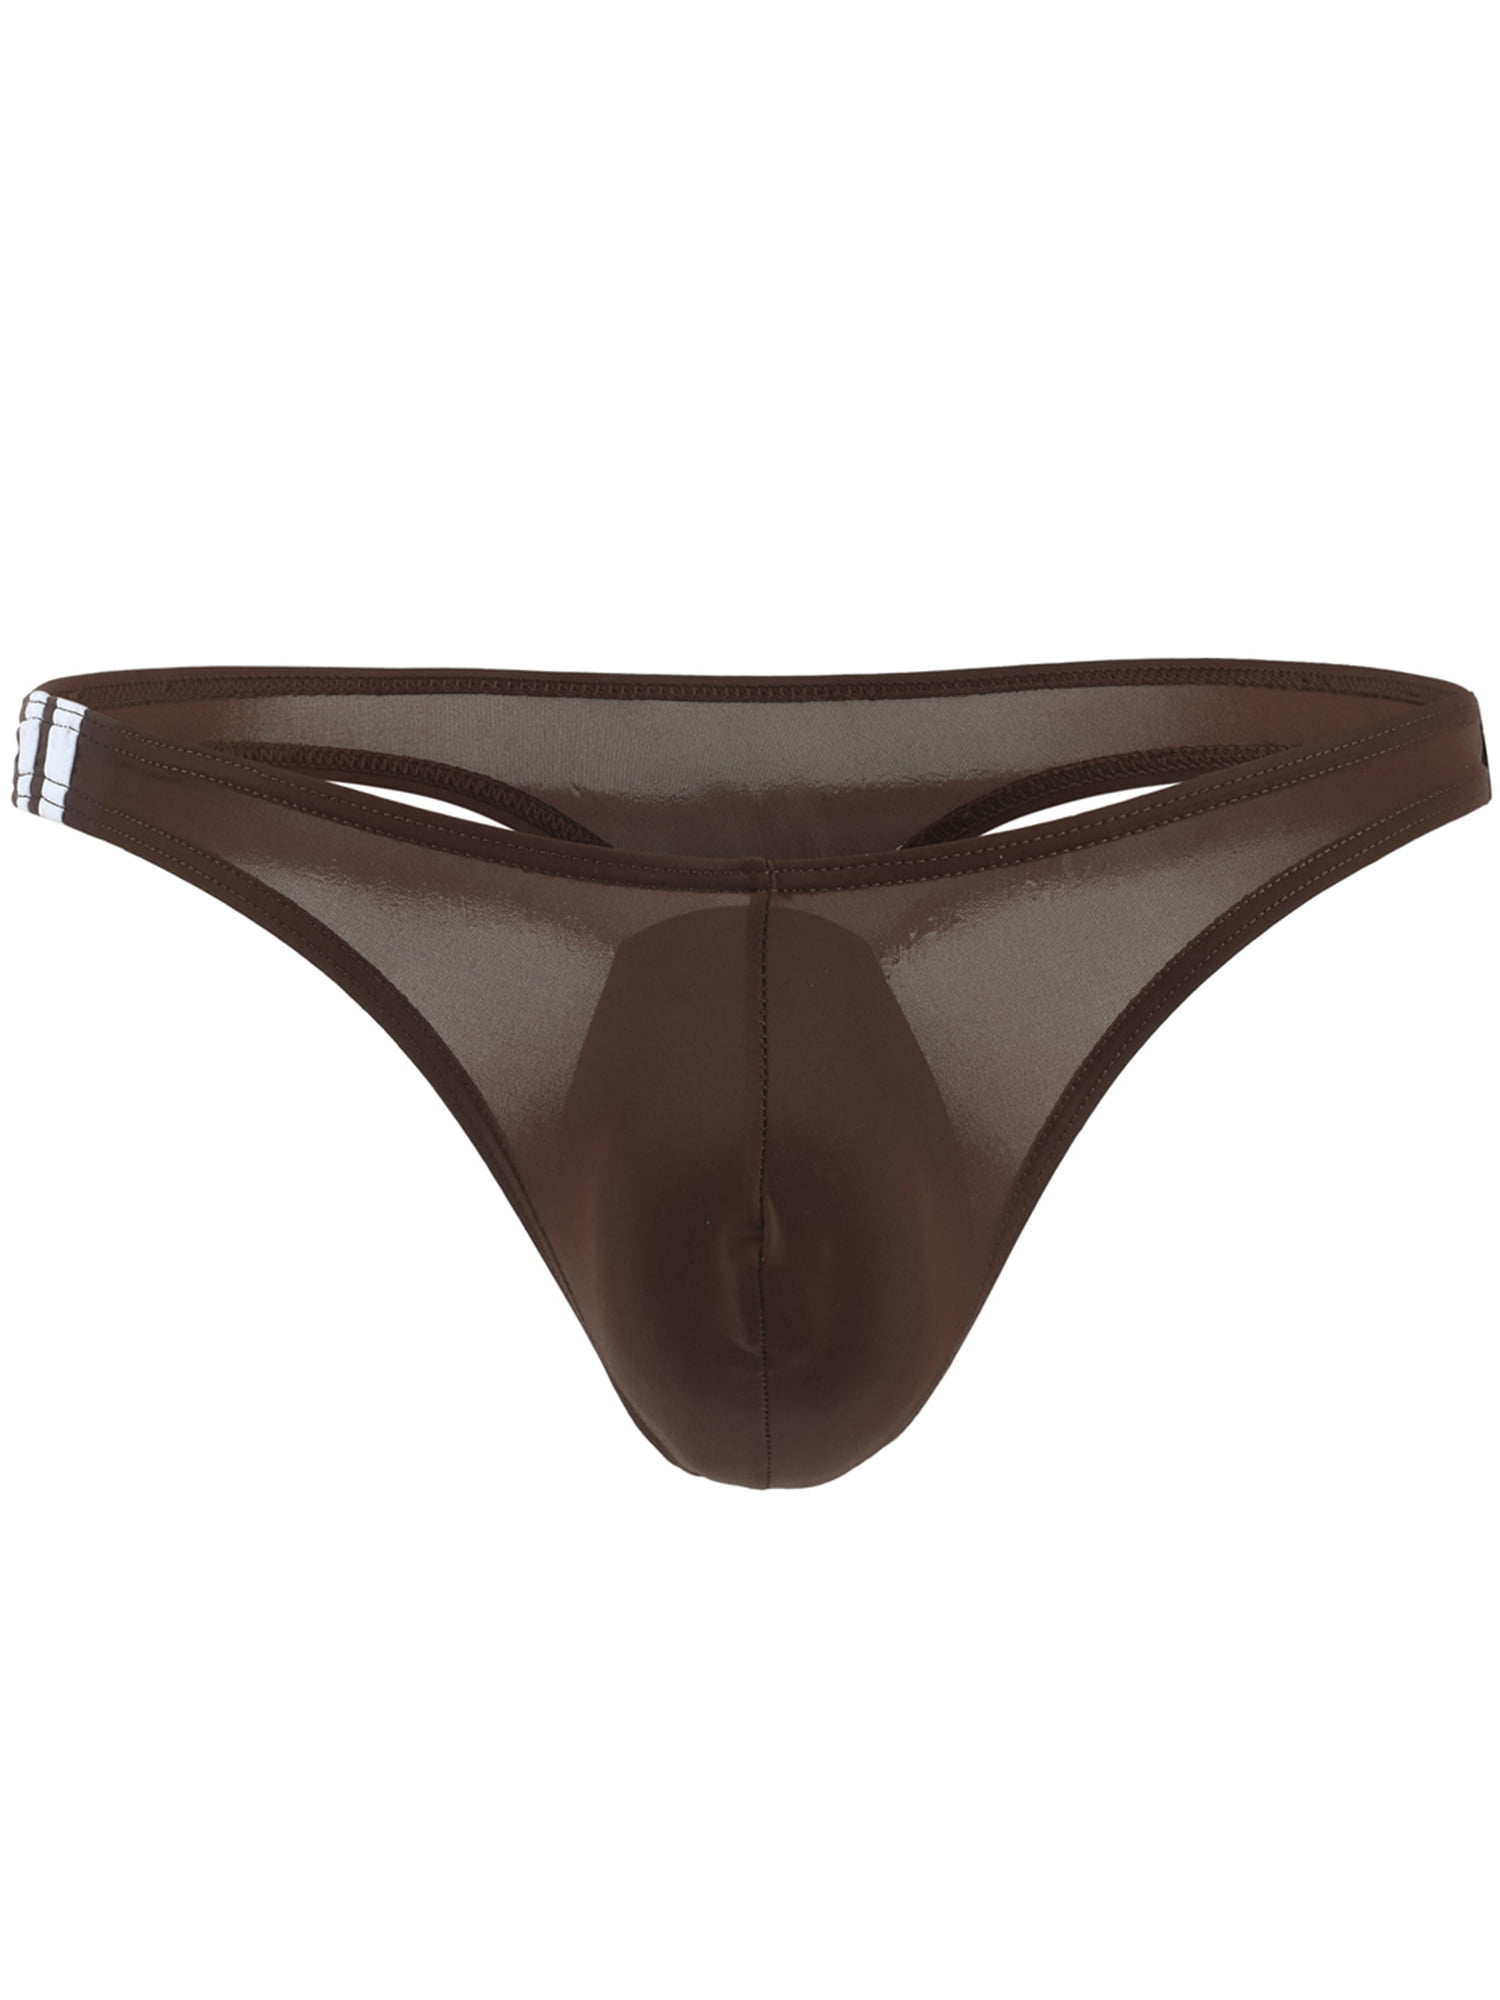 Men Bulge Pouch Thong Underwear Posing T-Back Lingerie Jockstrap Underpants